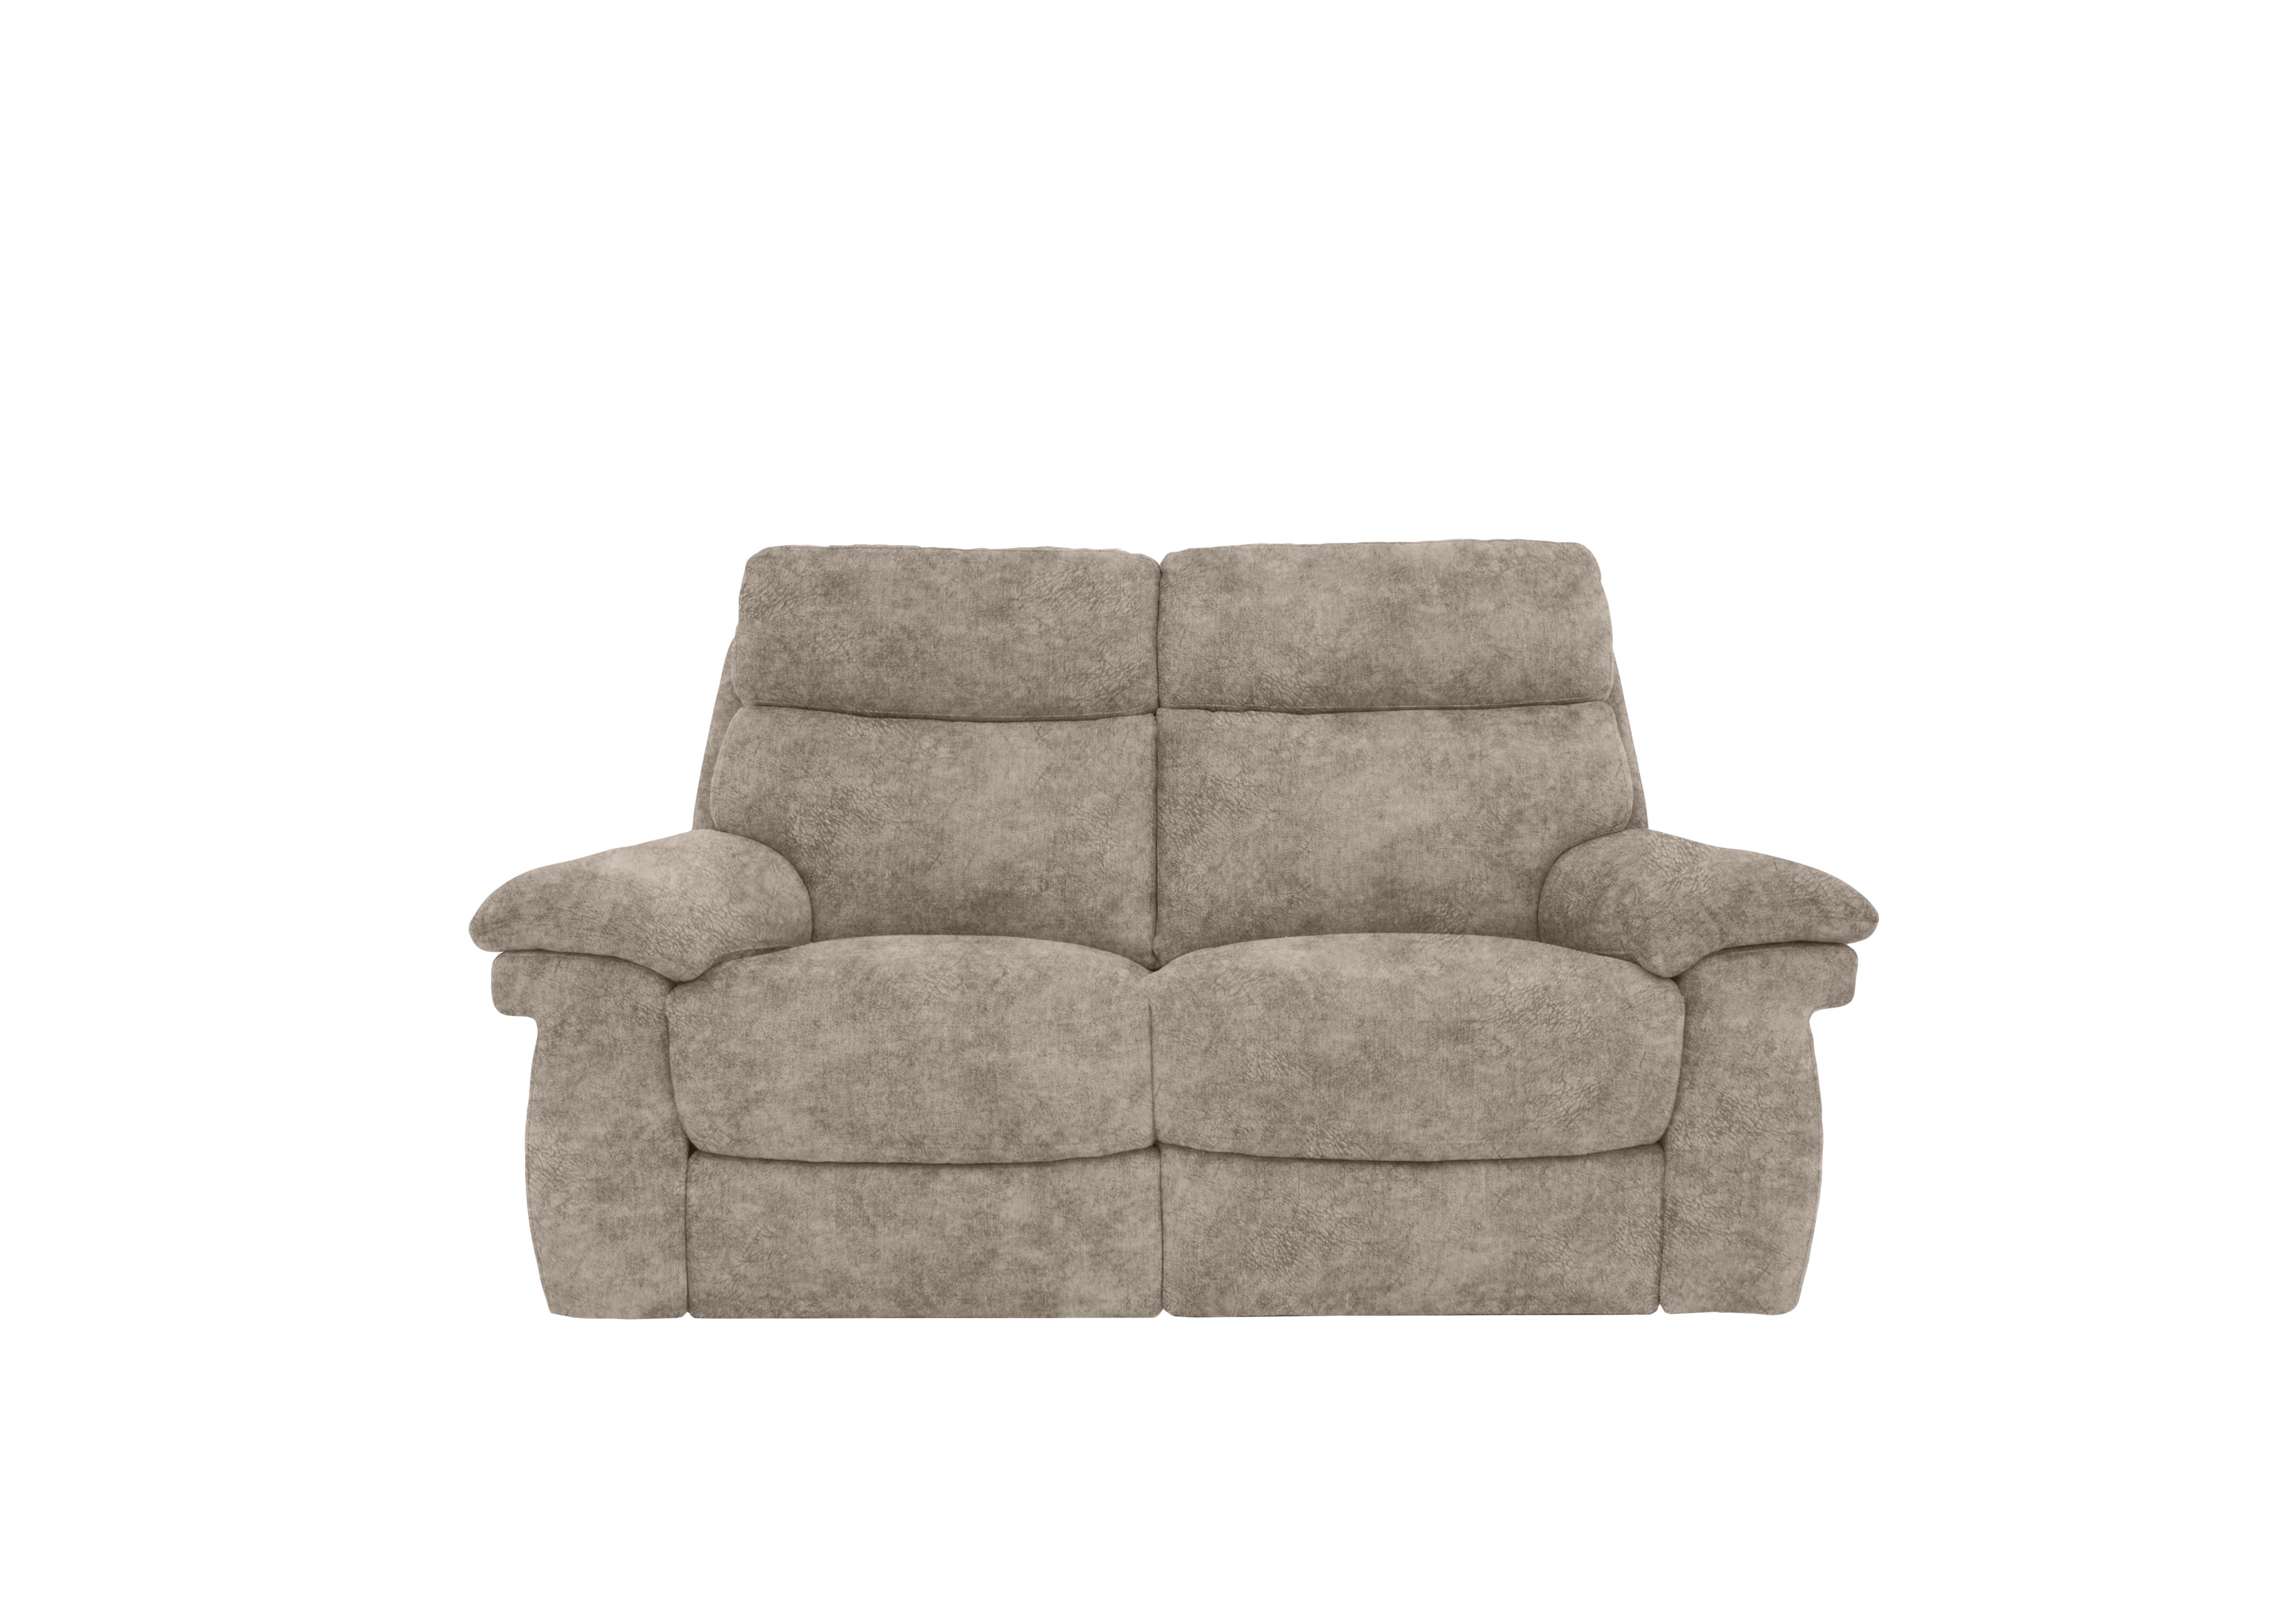 Serene 2 Seater Fabric Power Recliner Sofa with Power Headrests in Bfa-Bnn-R29 Mink on Furniture Village